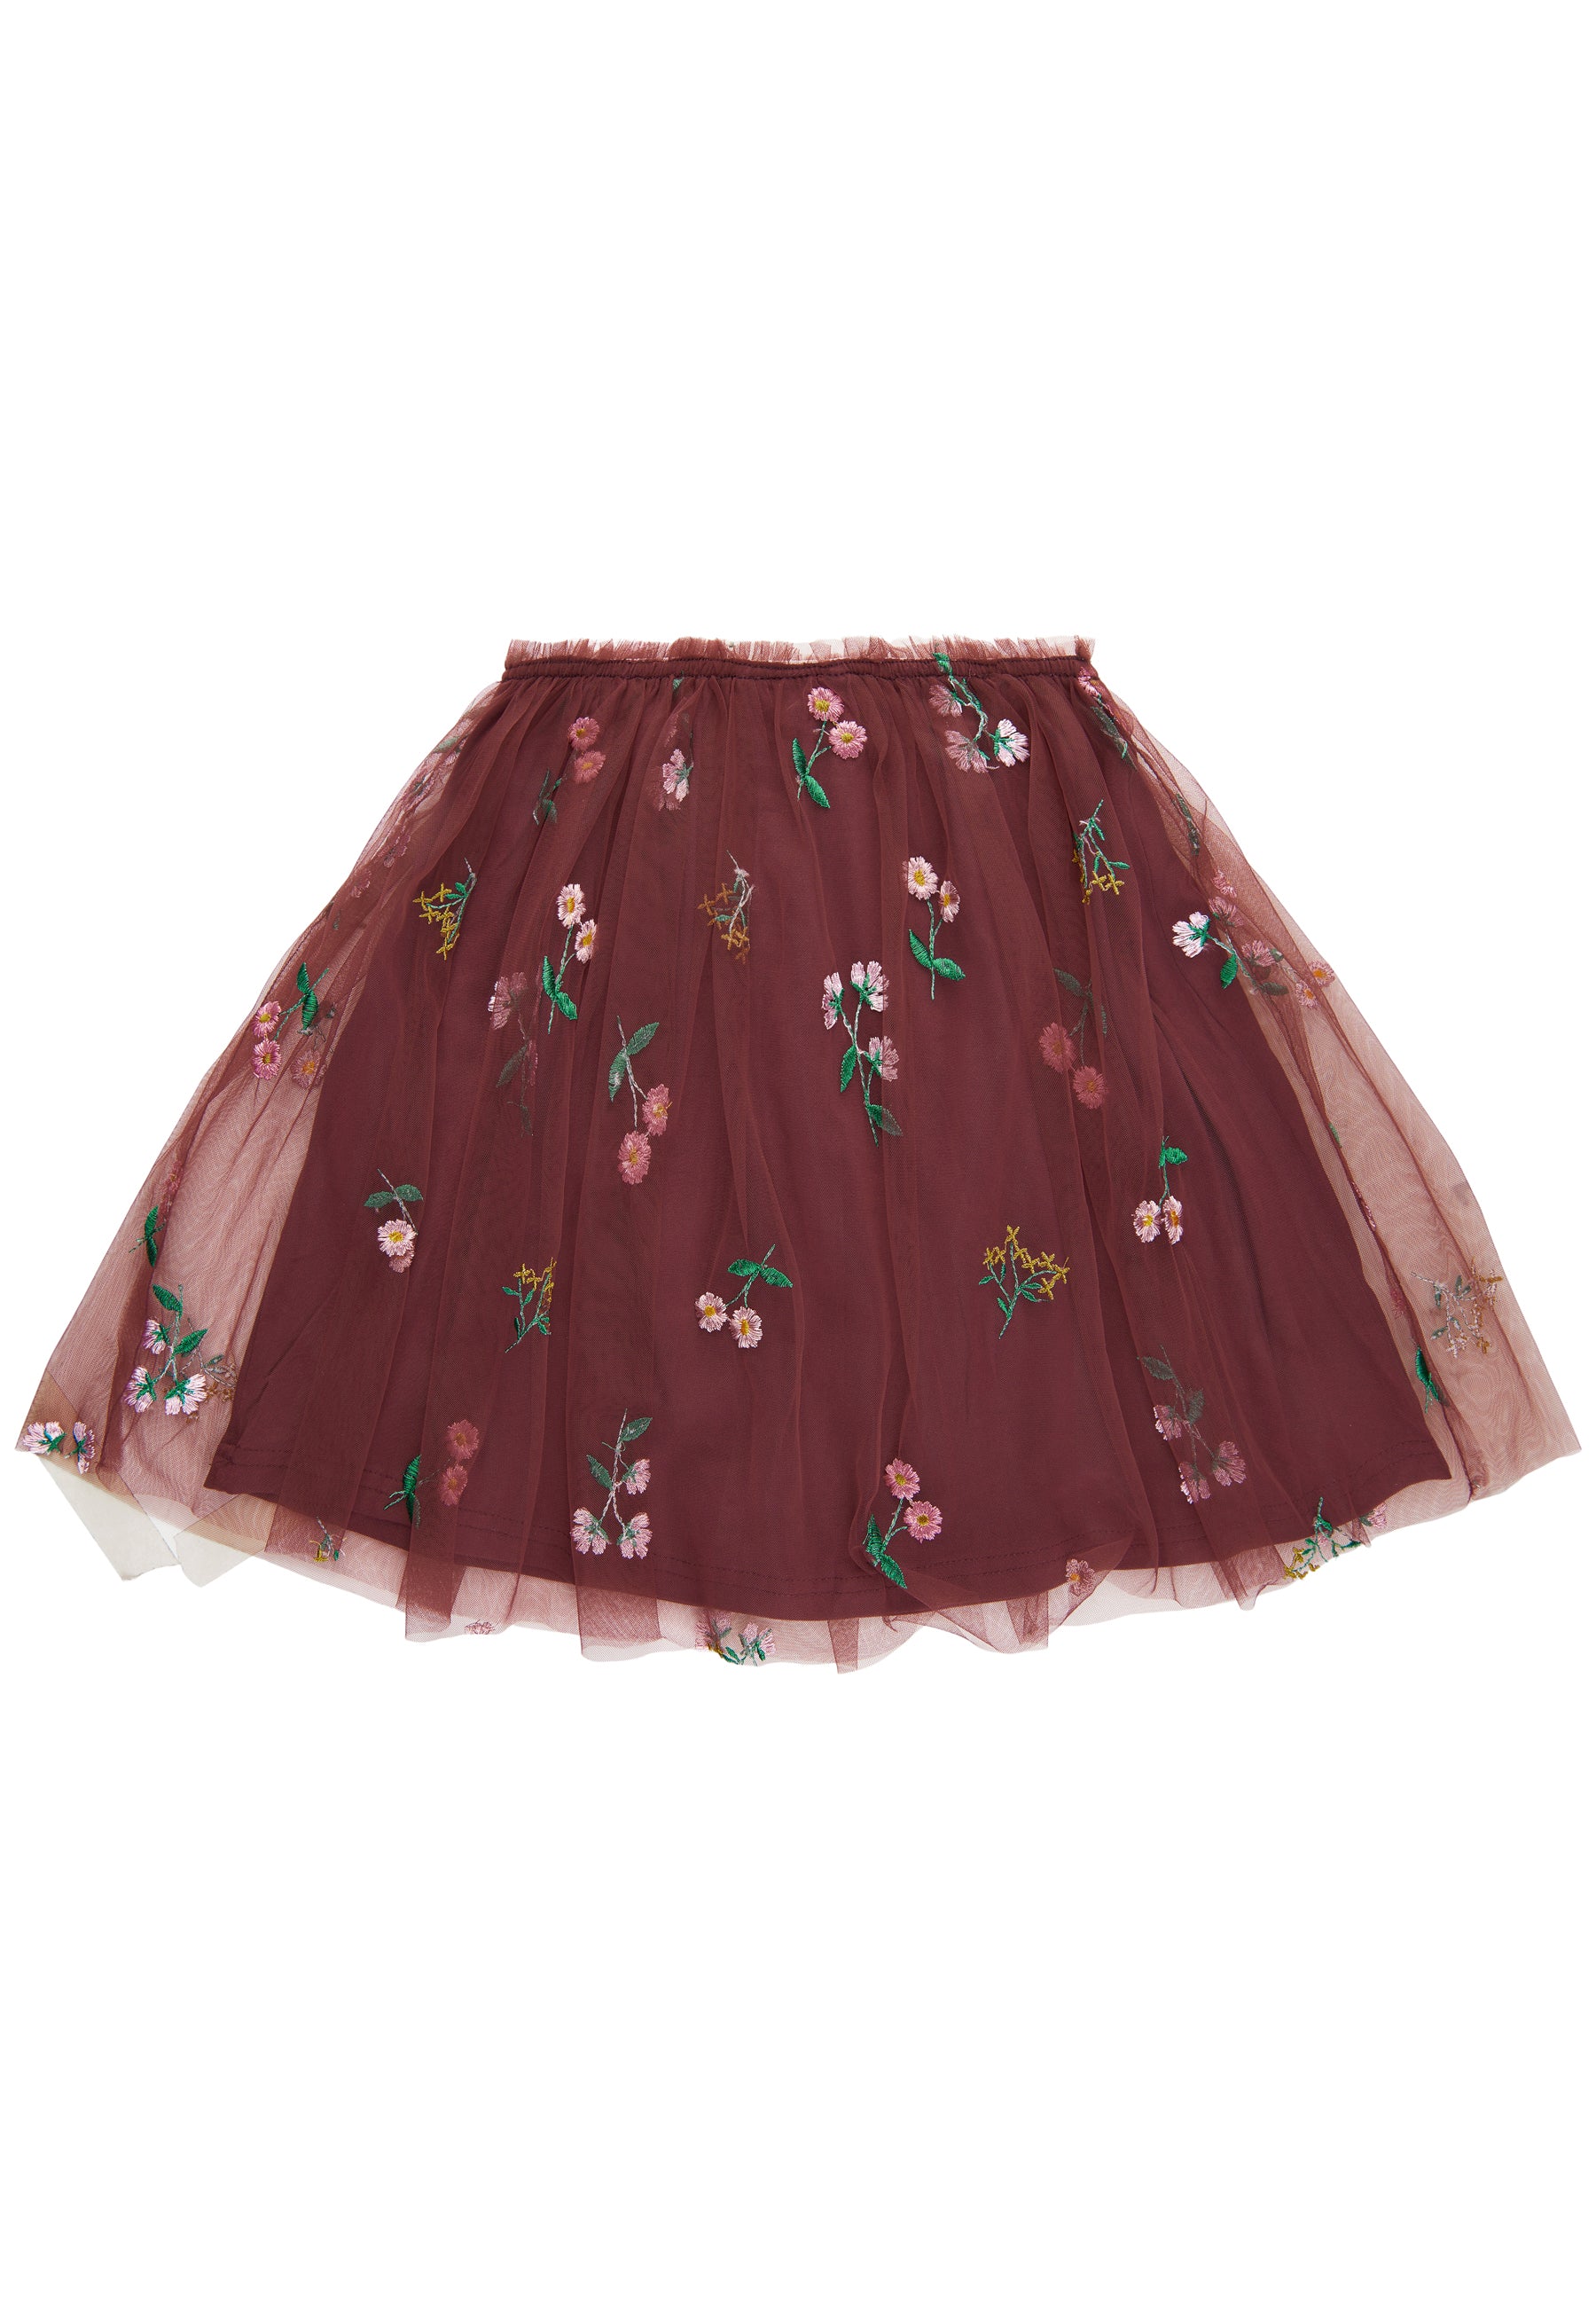 The New - Habiana Skirt